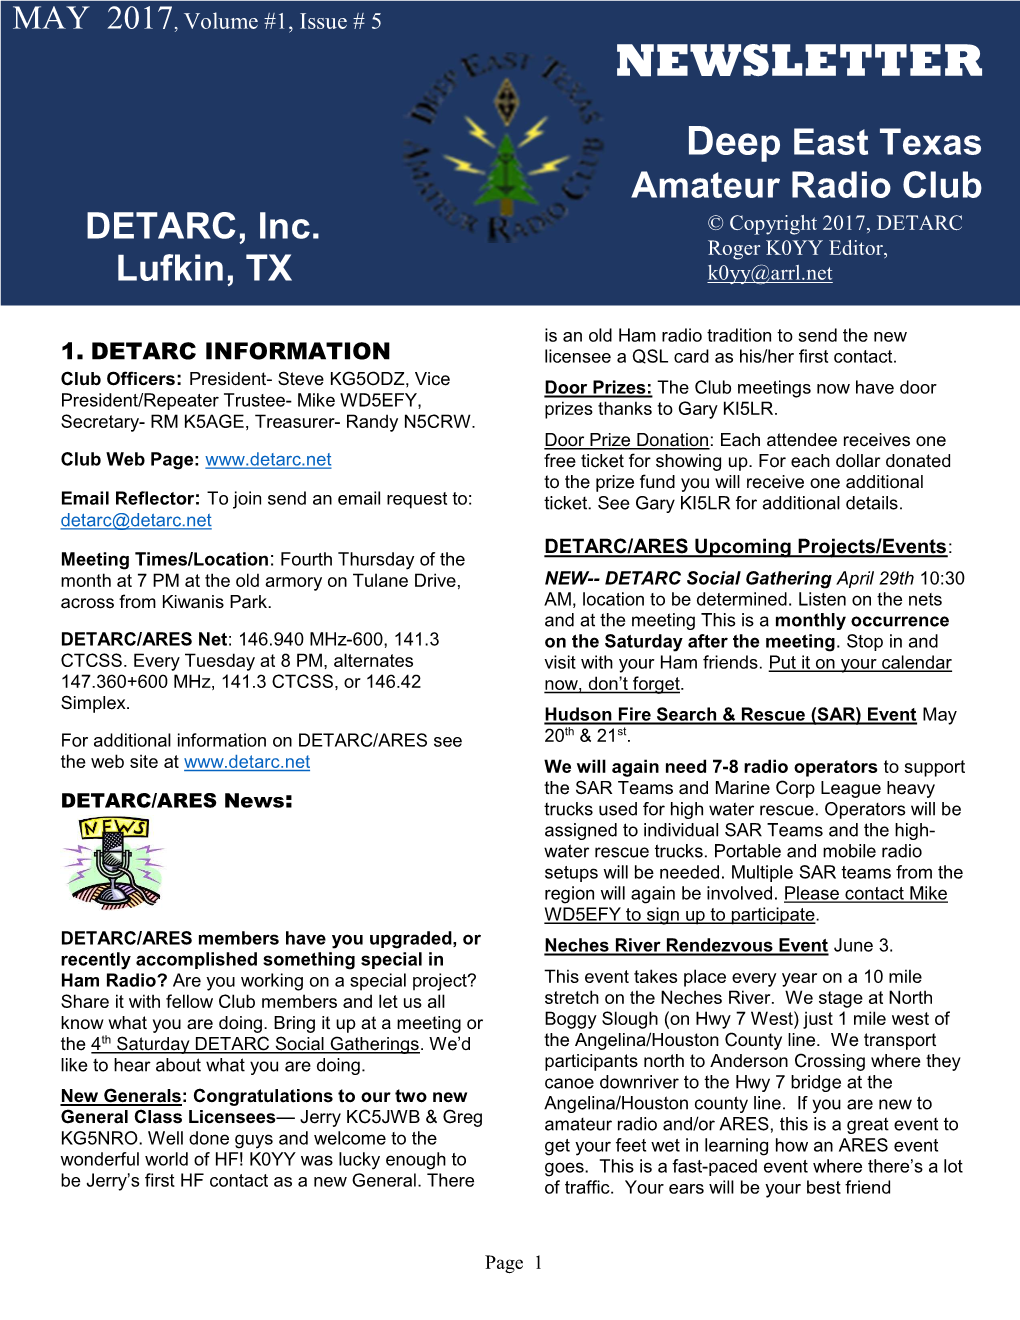 May 2017 DETARC Newsletter